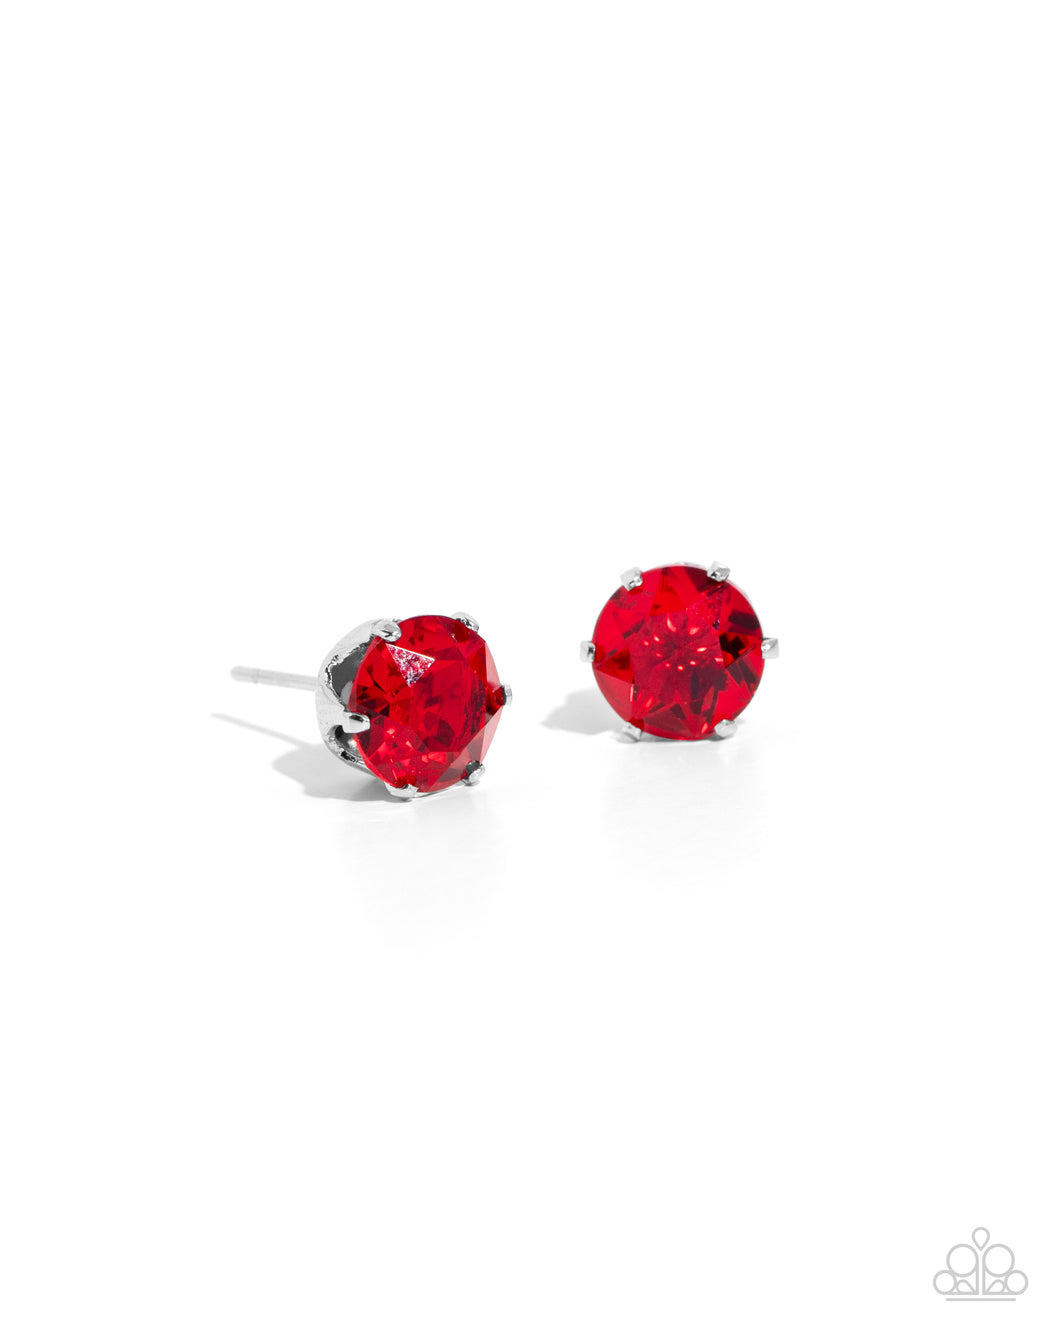 Breathtaking Birthstone - Red-Ruby Post Earring - Paparazzi - Dare2bdazzlin N Jewelry